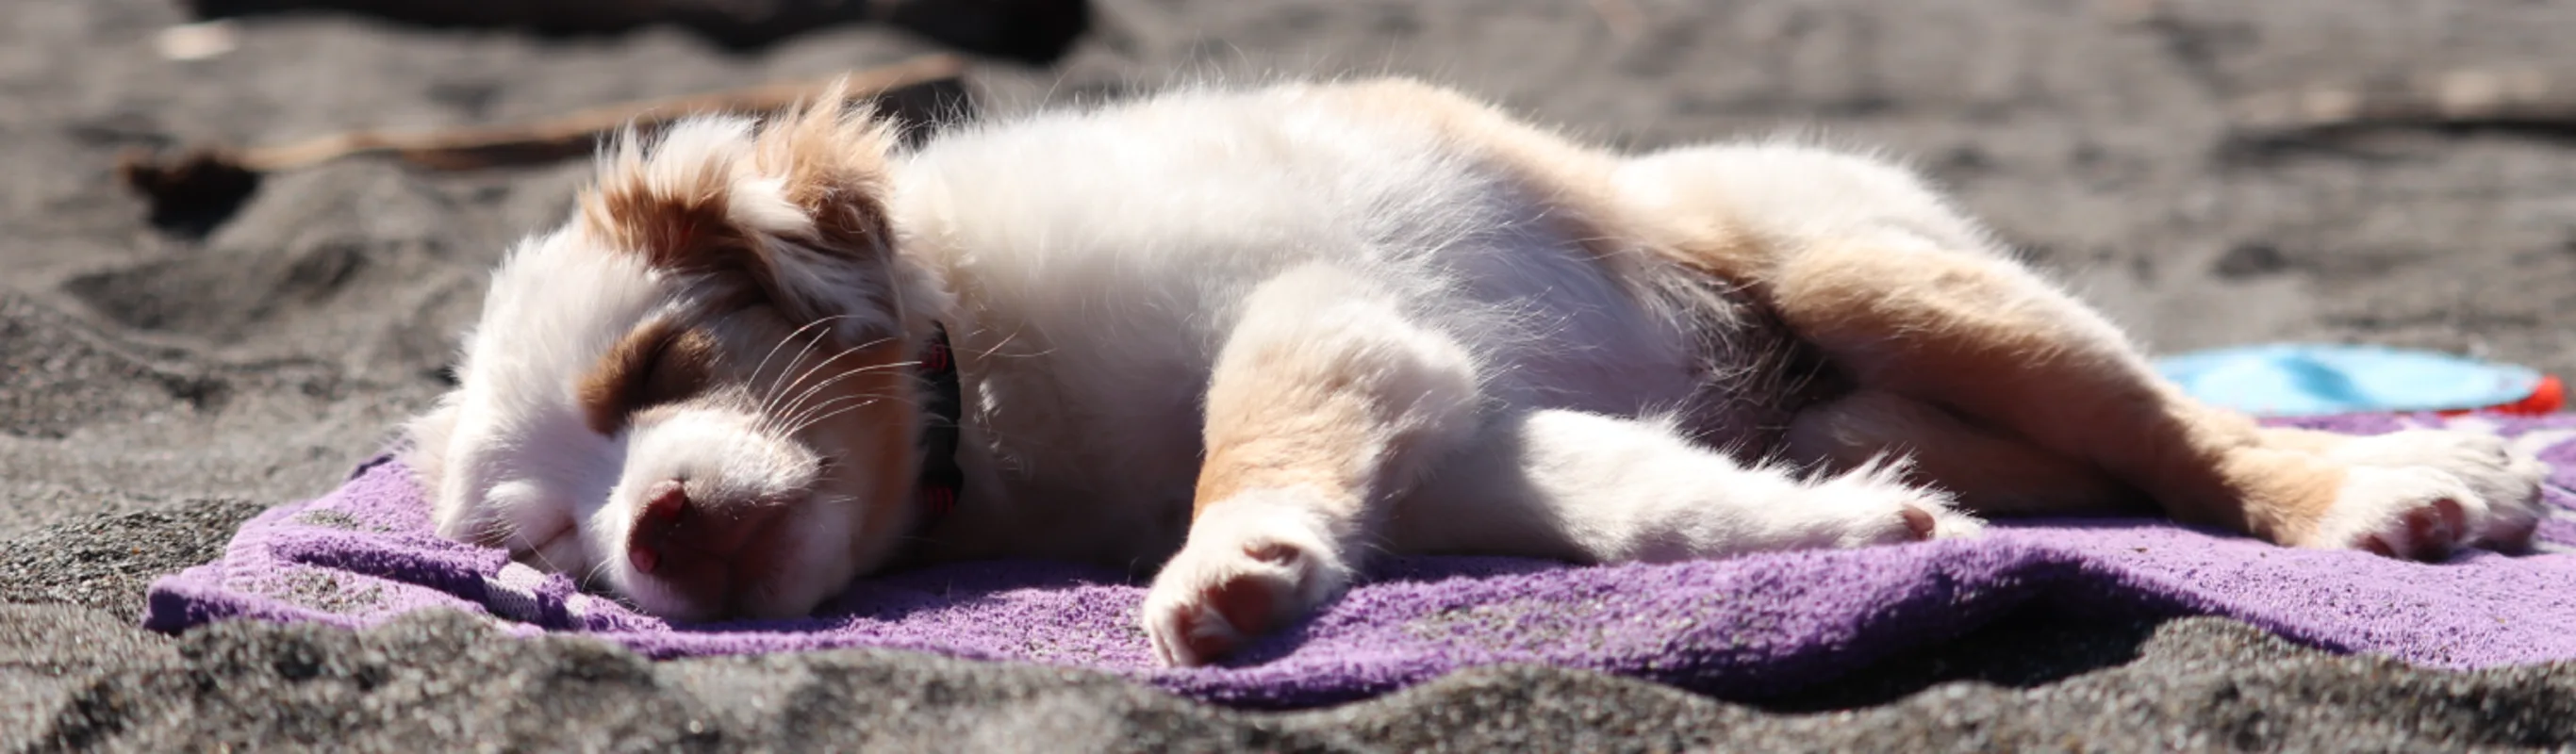 puppy sleeping on towel on the beach